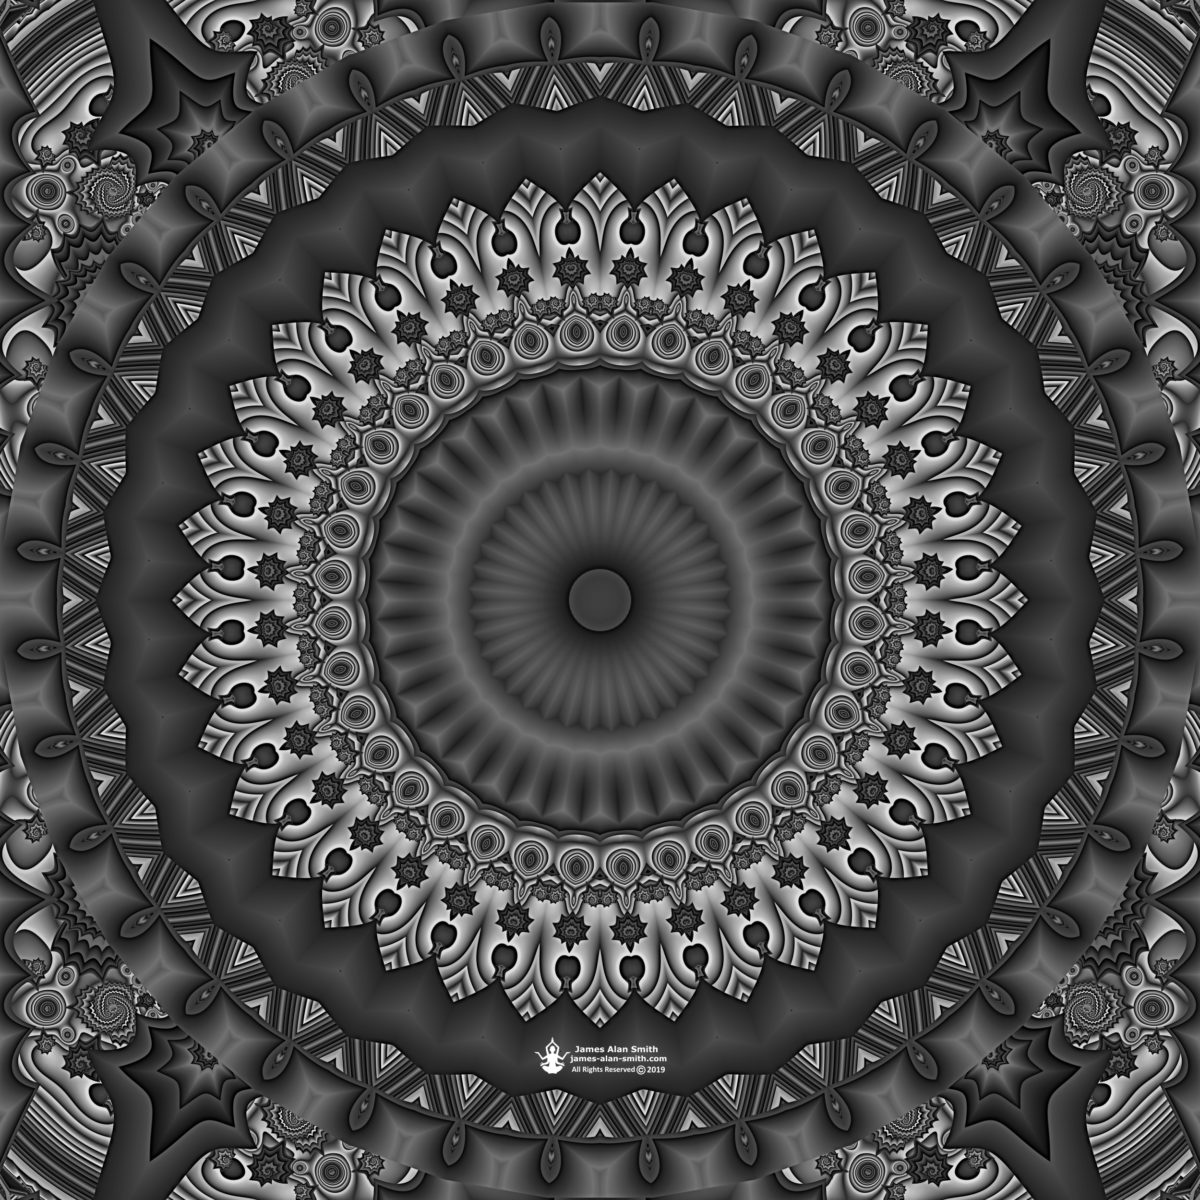 Black and White Cutout Mandala: Artwork by James Alan Smith